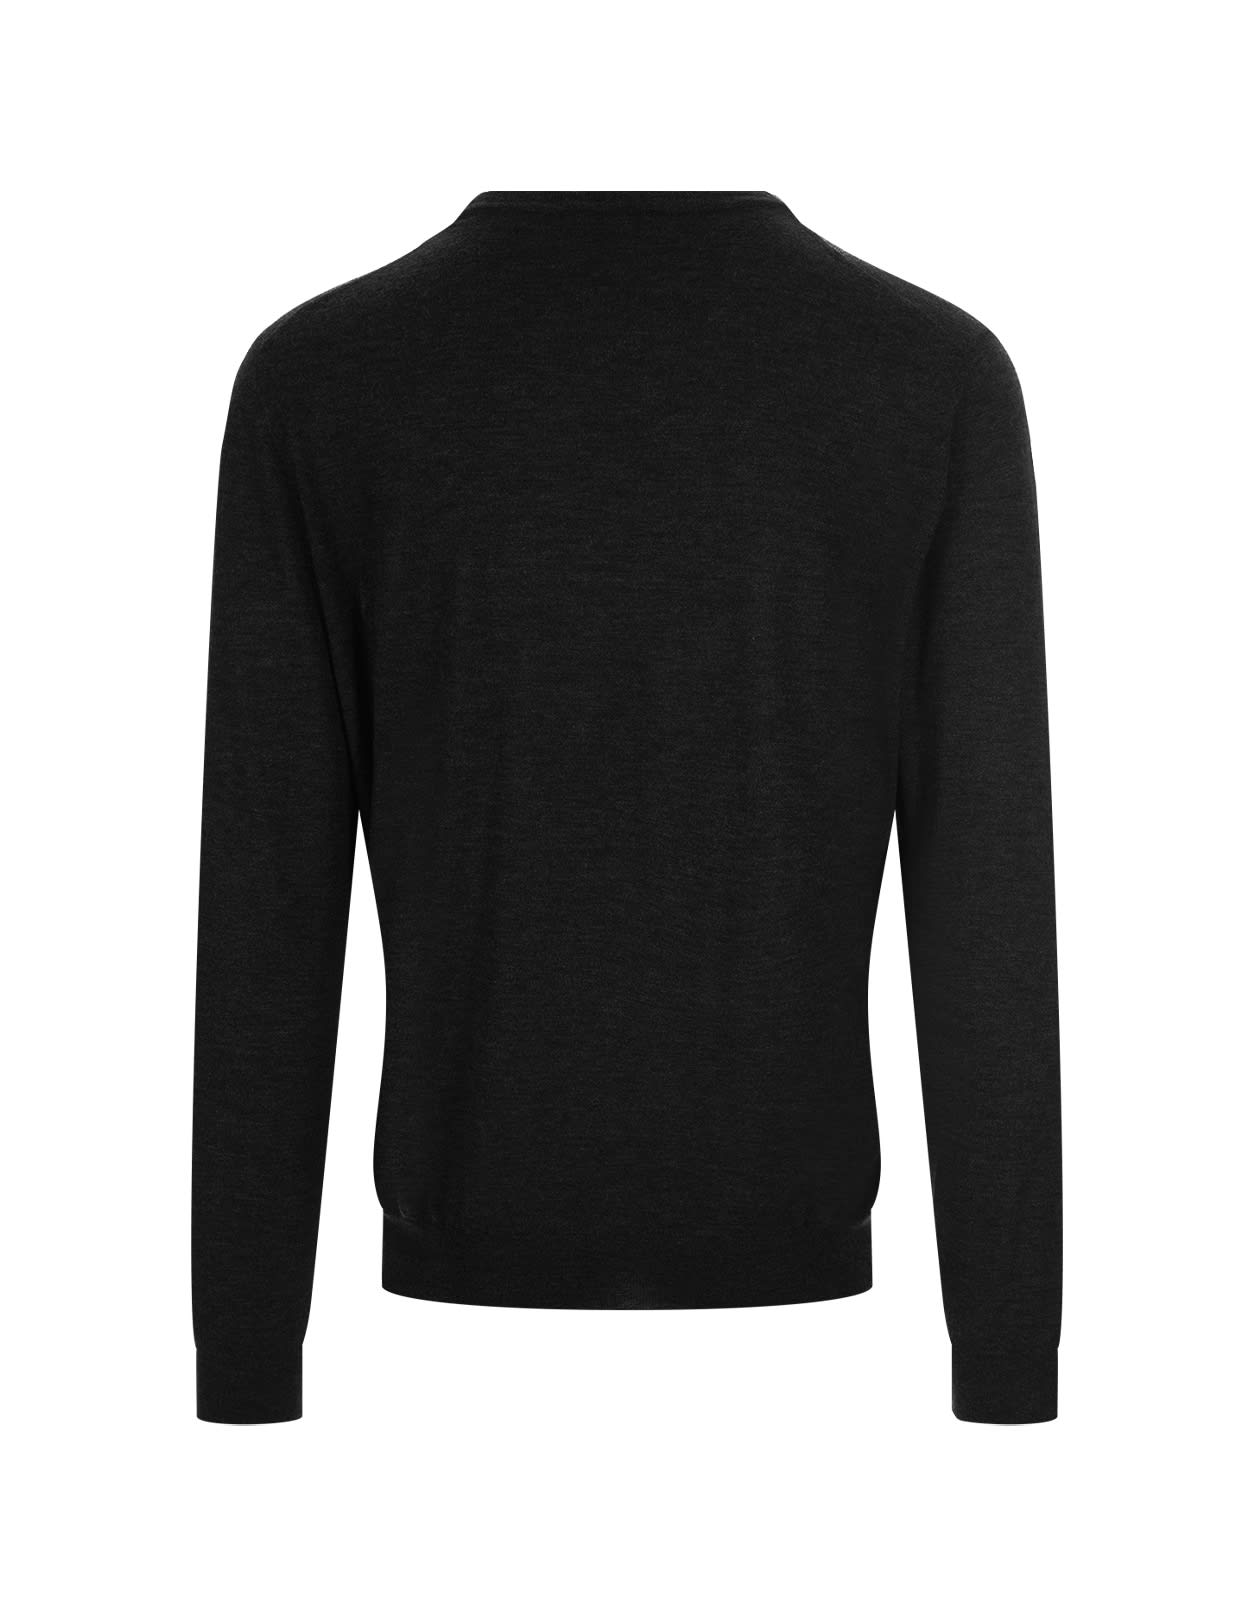 Shop Fedeli Black Cashmere Sweater